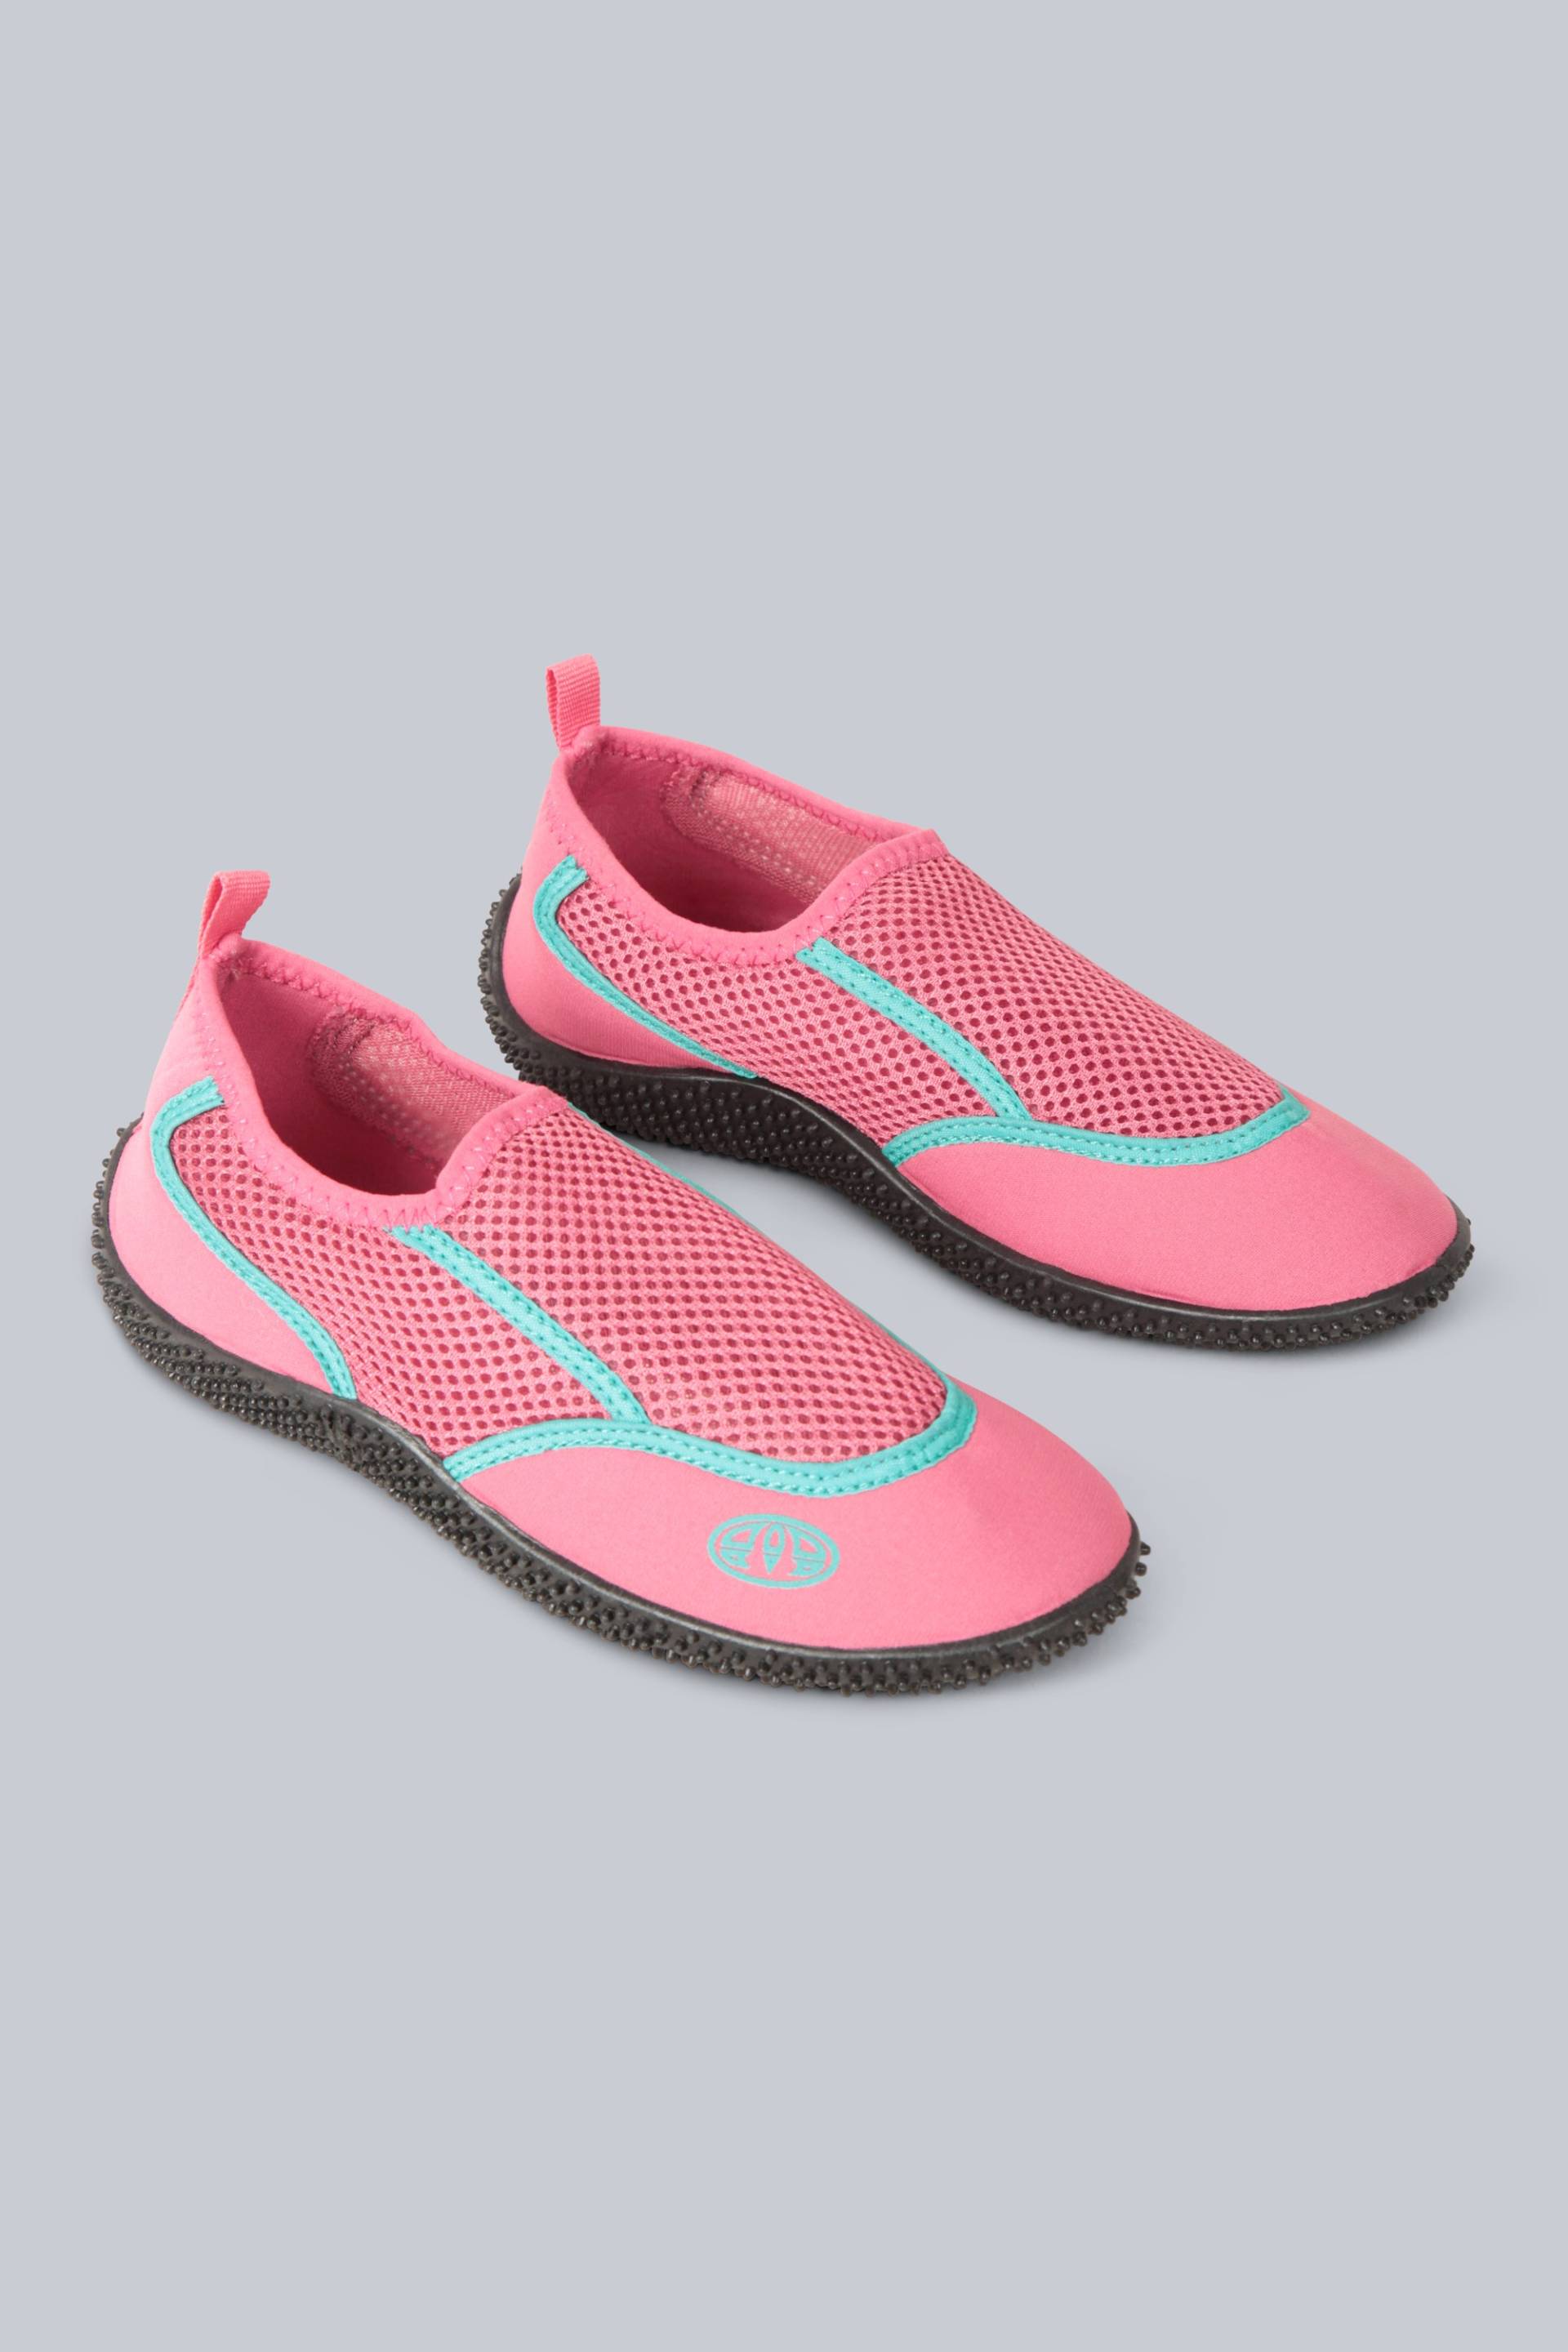 Cove Kinder Aqua-Schuhe - Intensiv Pink von Animal